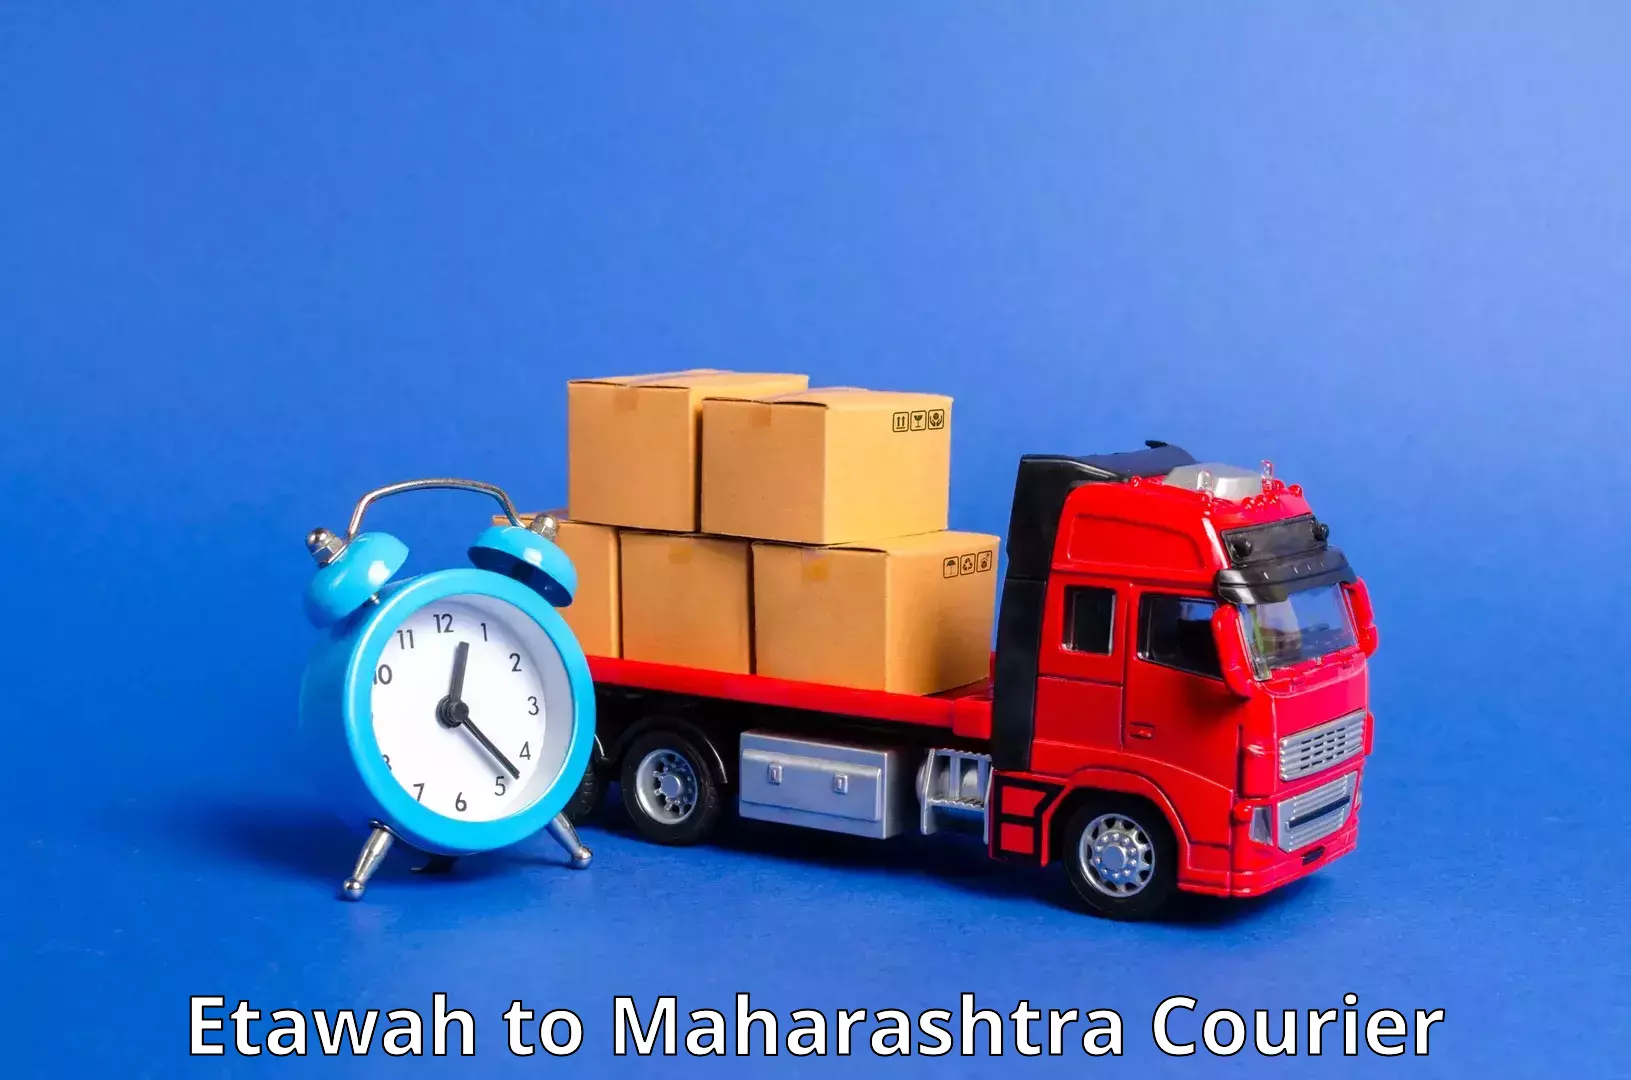 Courier service partnerships Etawah to Bhokar